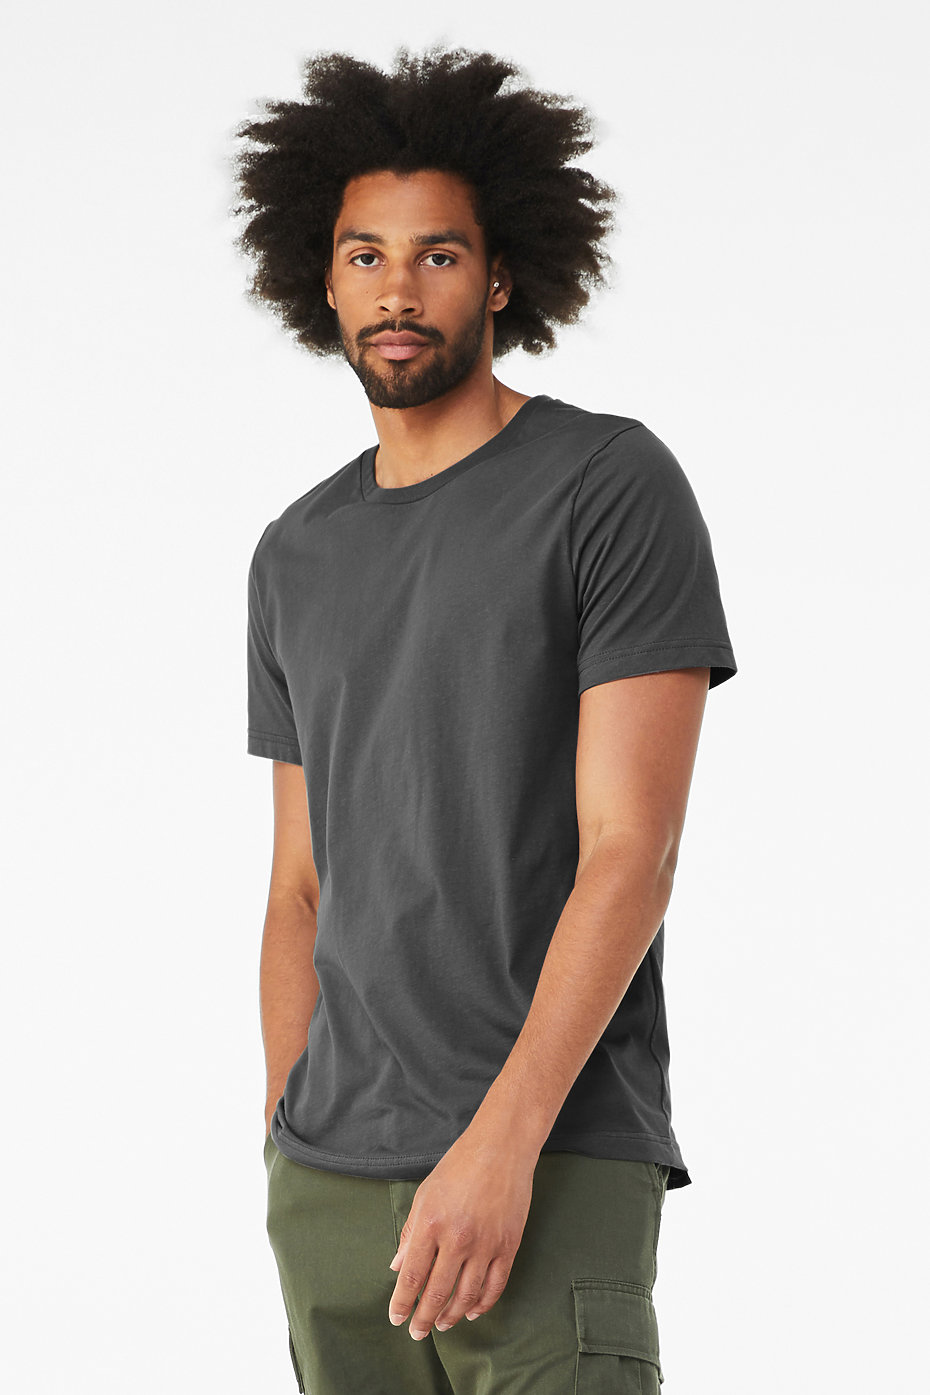 Tri Blend T Shirts | Unisex Tri Blend Shirt | Mens Wholesale Clothing ...